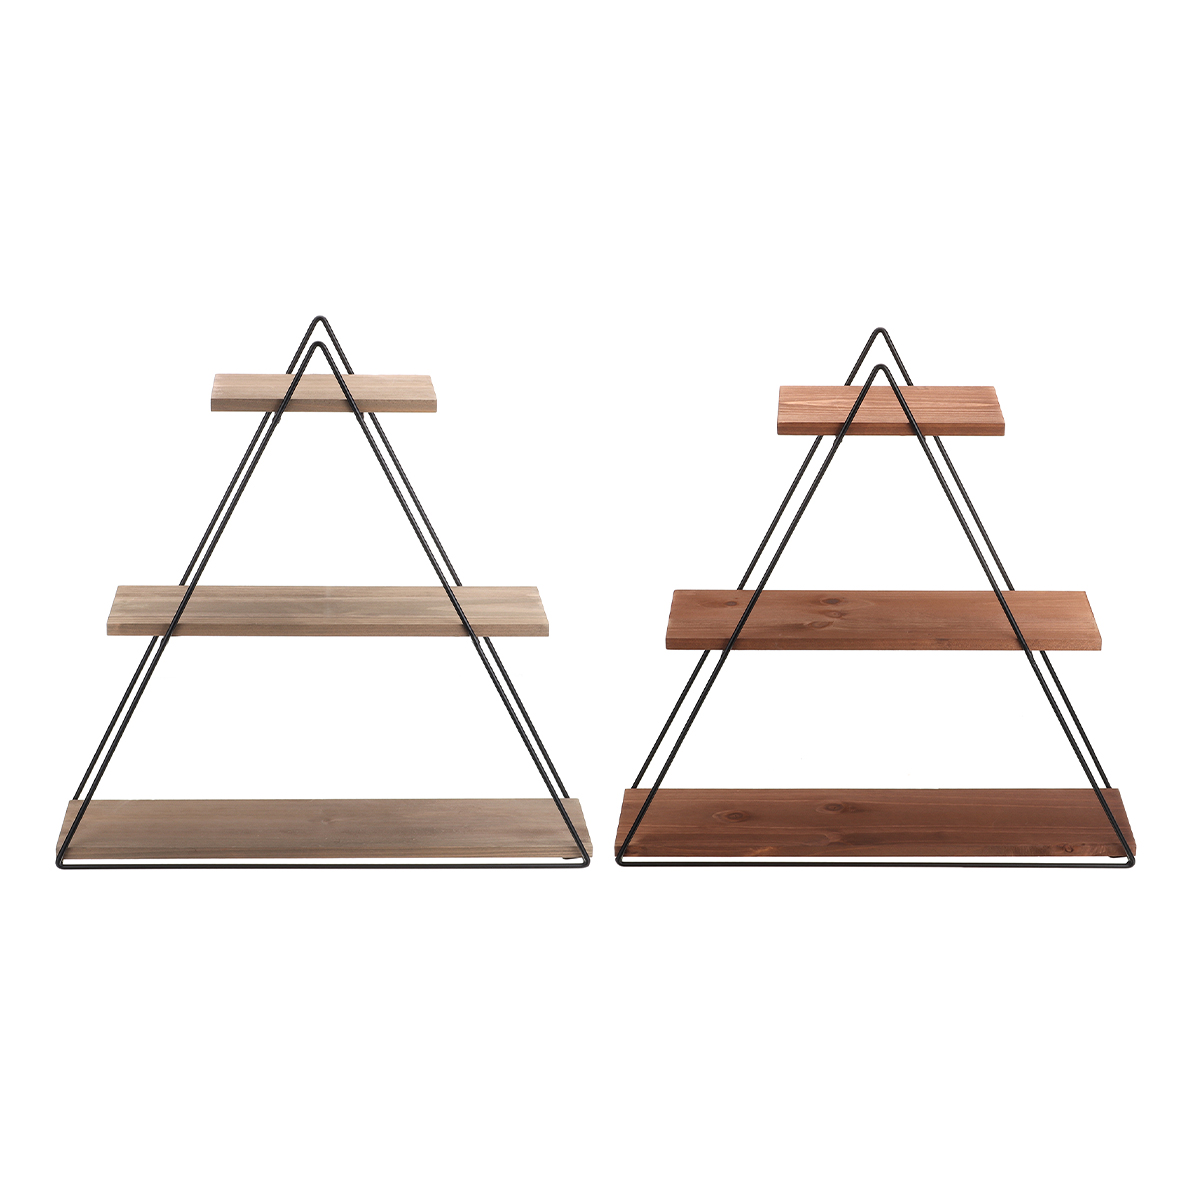 3-Tier-Triangular-Wall-Mounted-Shelf-Floating-Shelves-Metal-Display-Rack-Home-Hanging-Stand-Decor-Fo-1791083-10